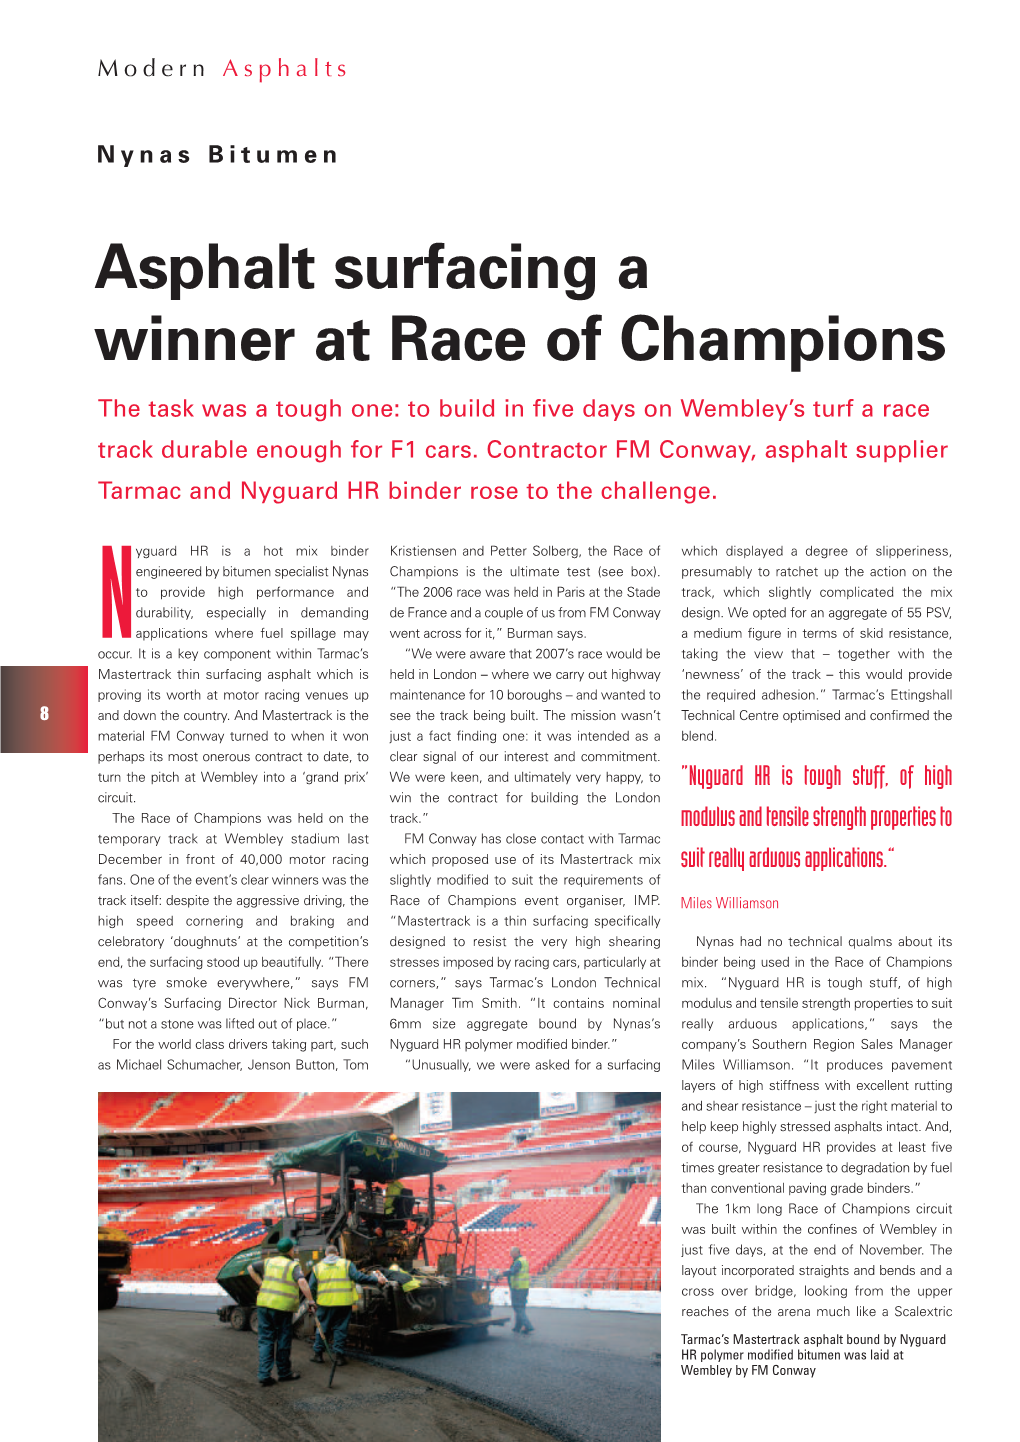 Asphalt Surfacing a Winner at Race of Champions